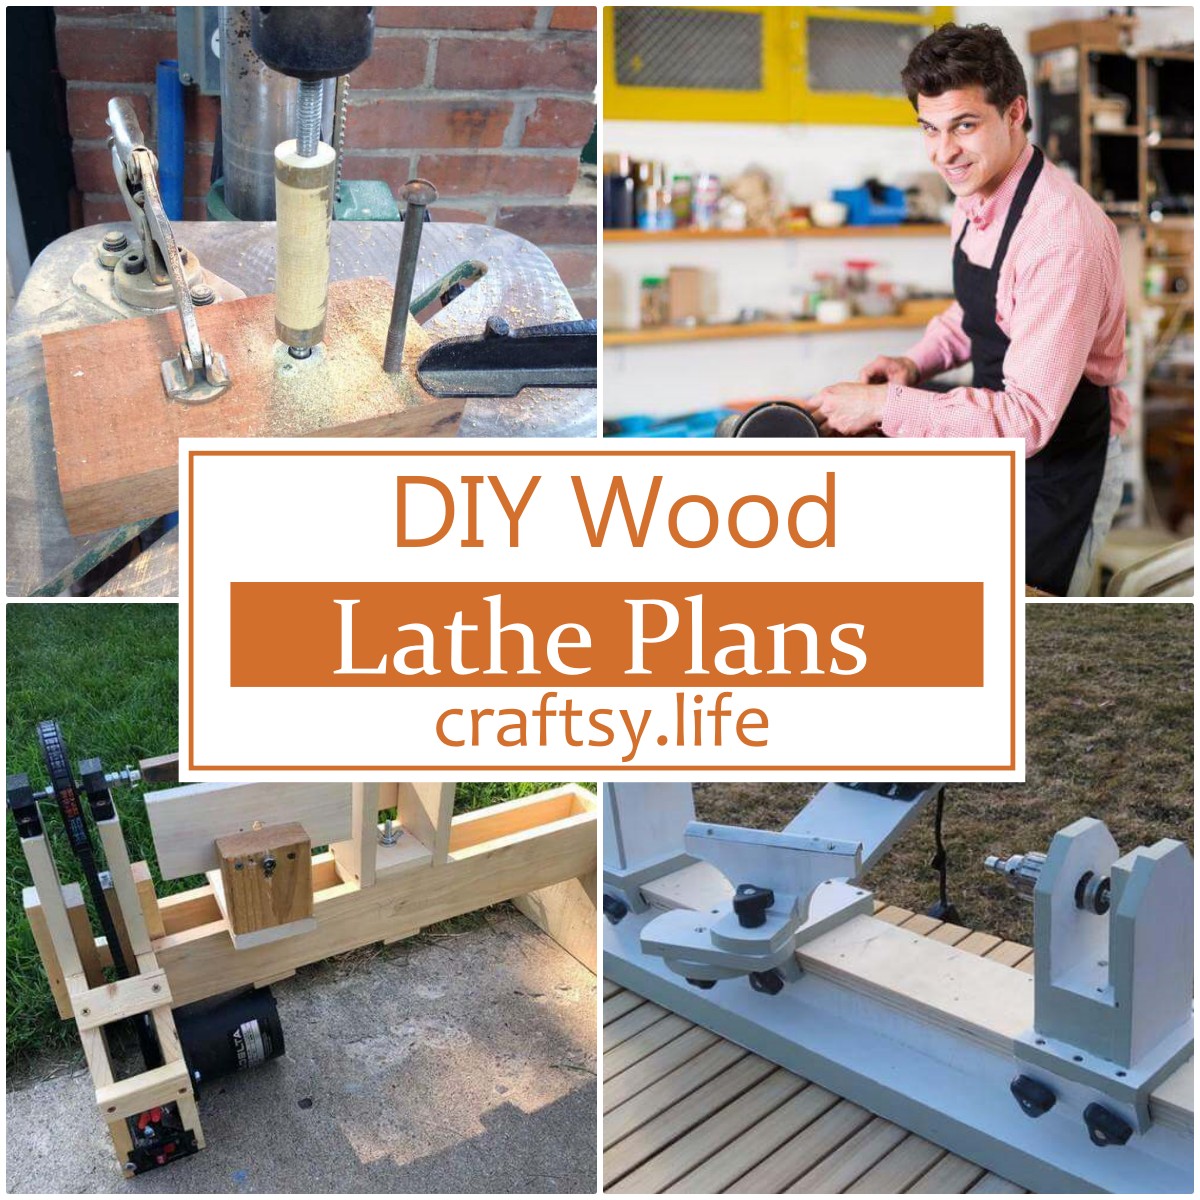 DIY Wood Lathe Plans